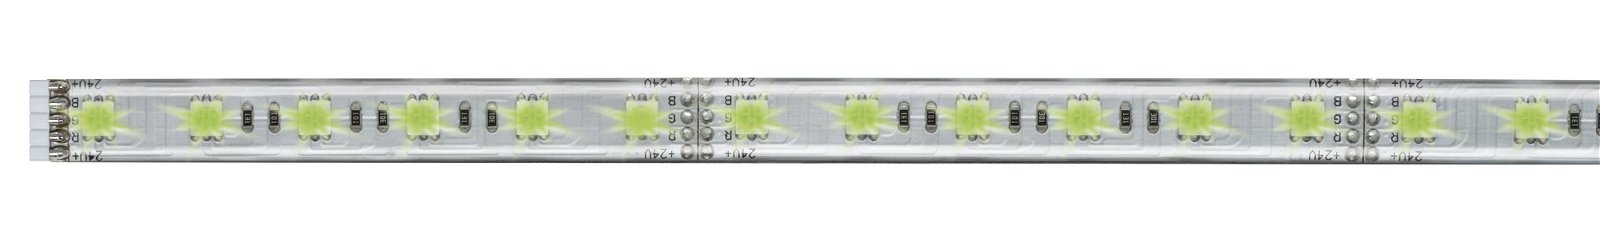 MaxLED 500 LED Strip RGB Einzelstripe 1m beschichtet 13,5W 420lm/m RGB